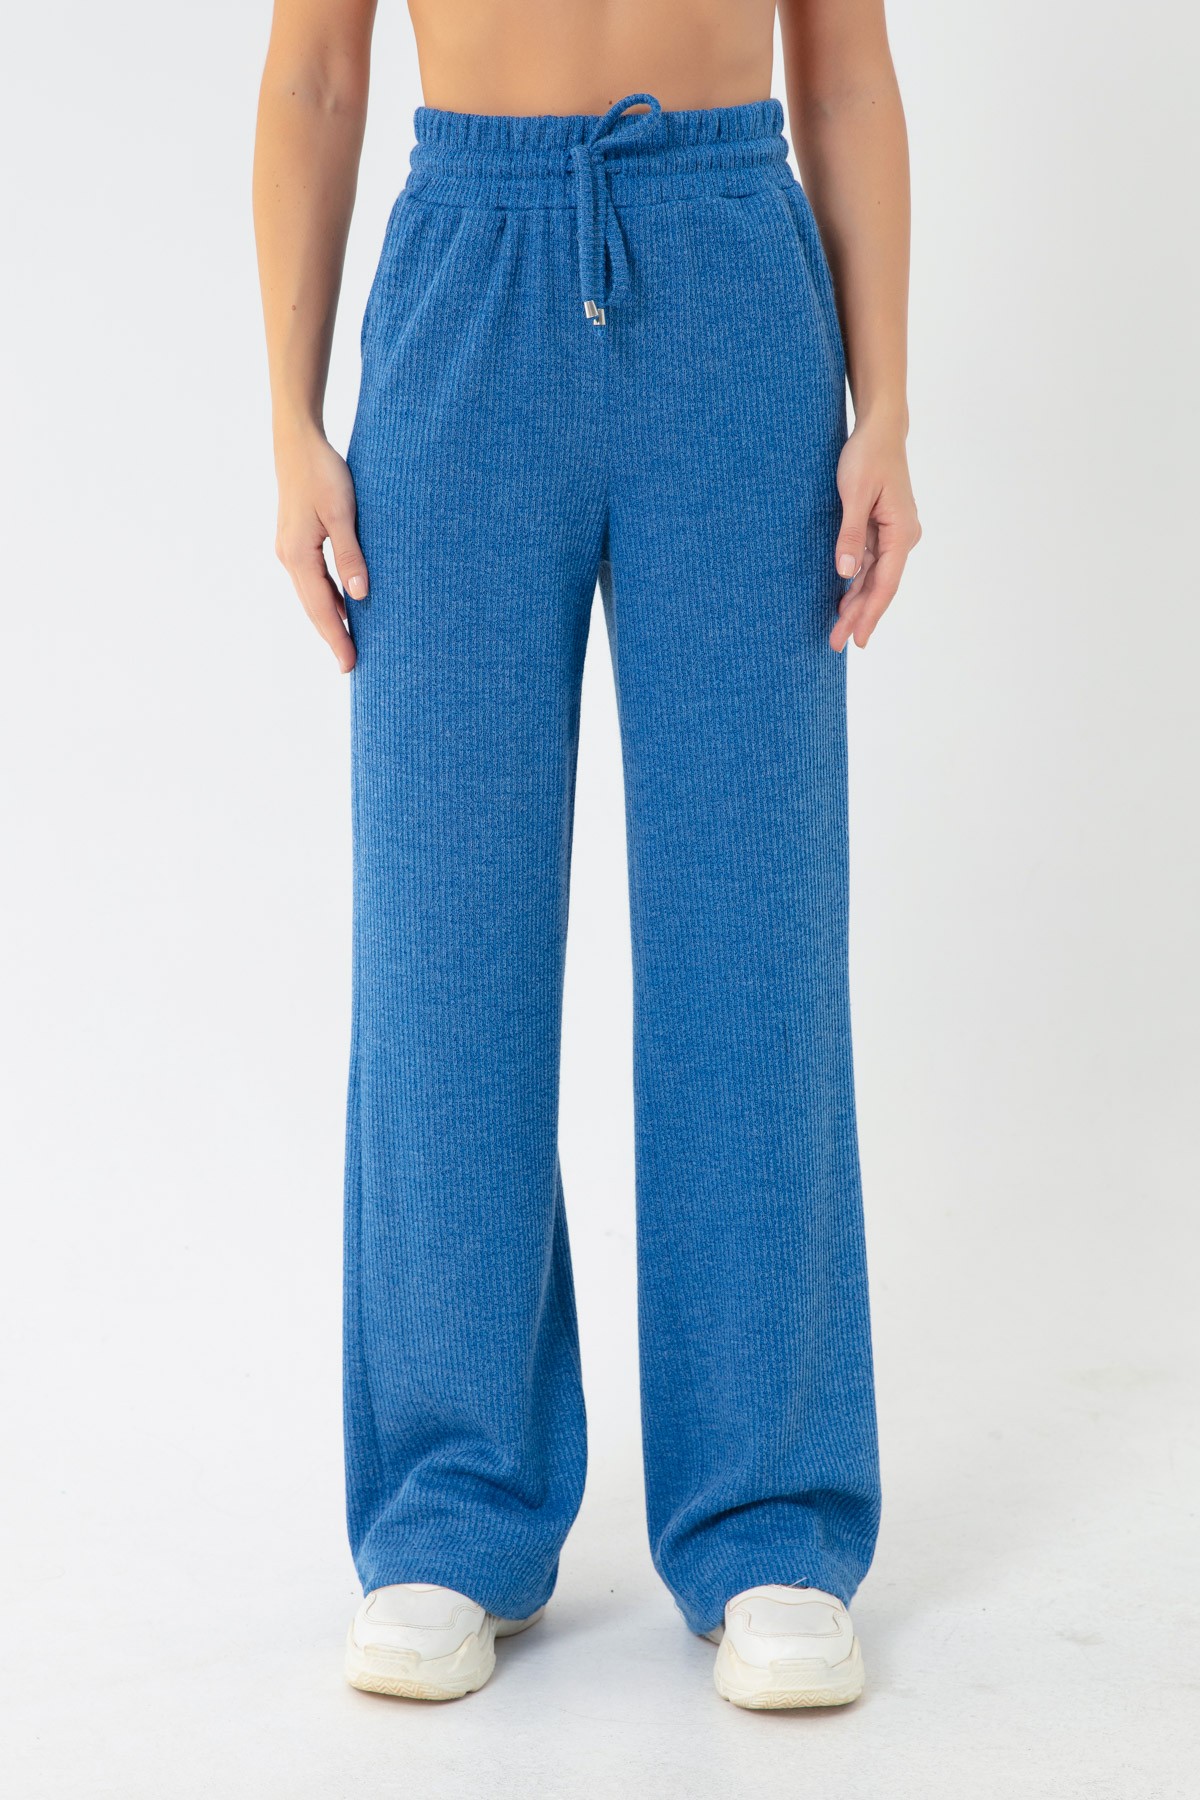 Kadın Beli Lastikli Örme Pantolon - Mavi